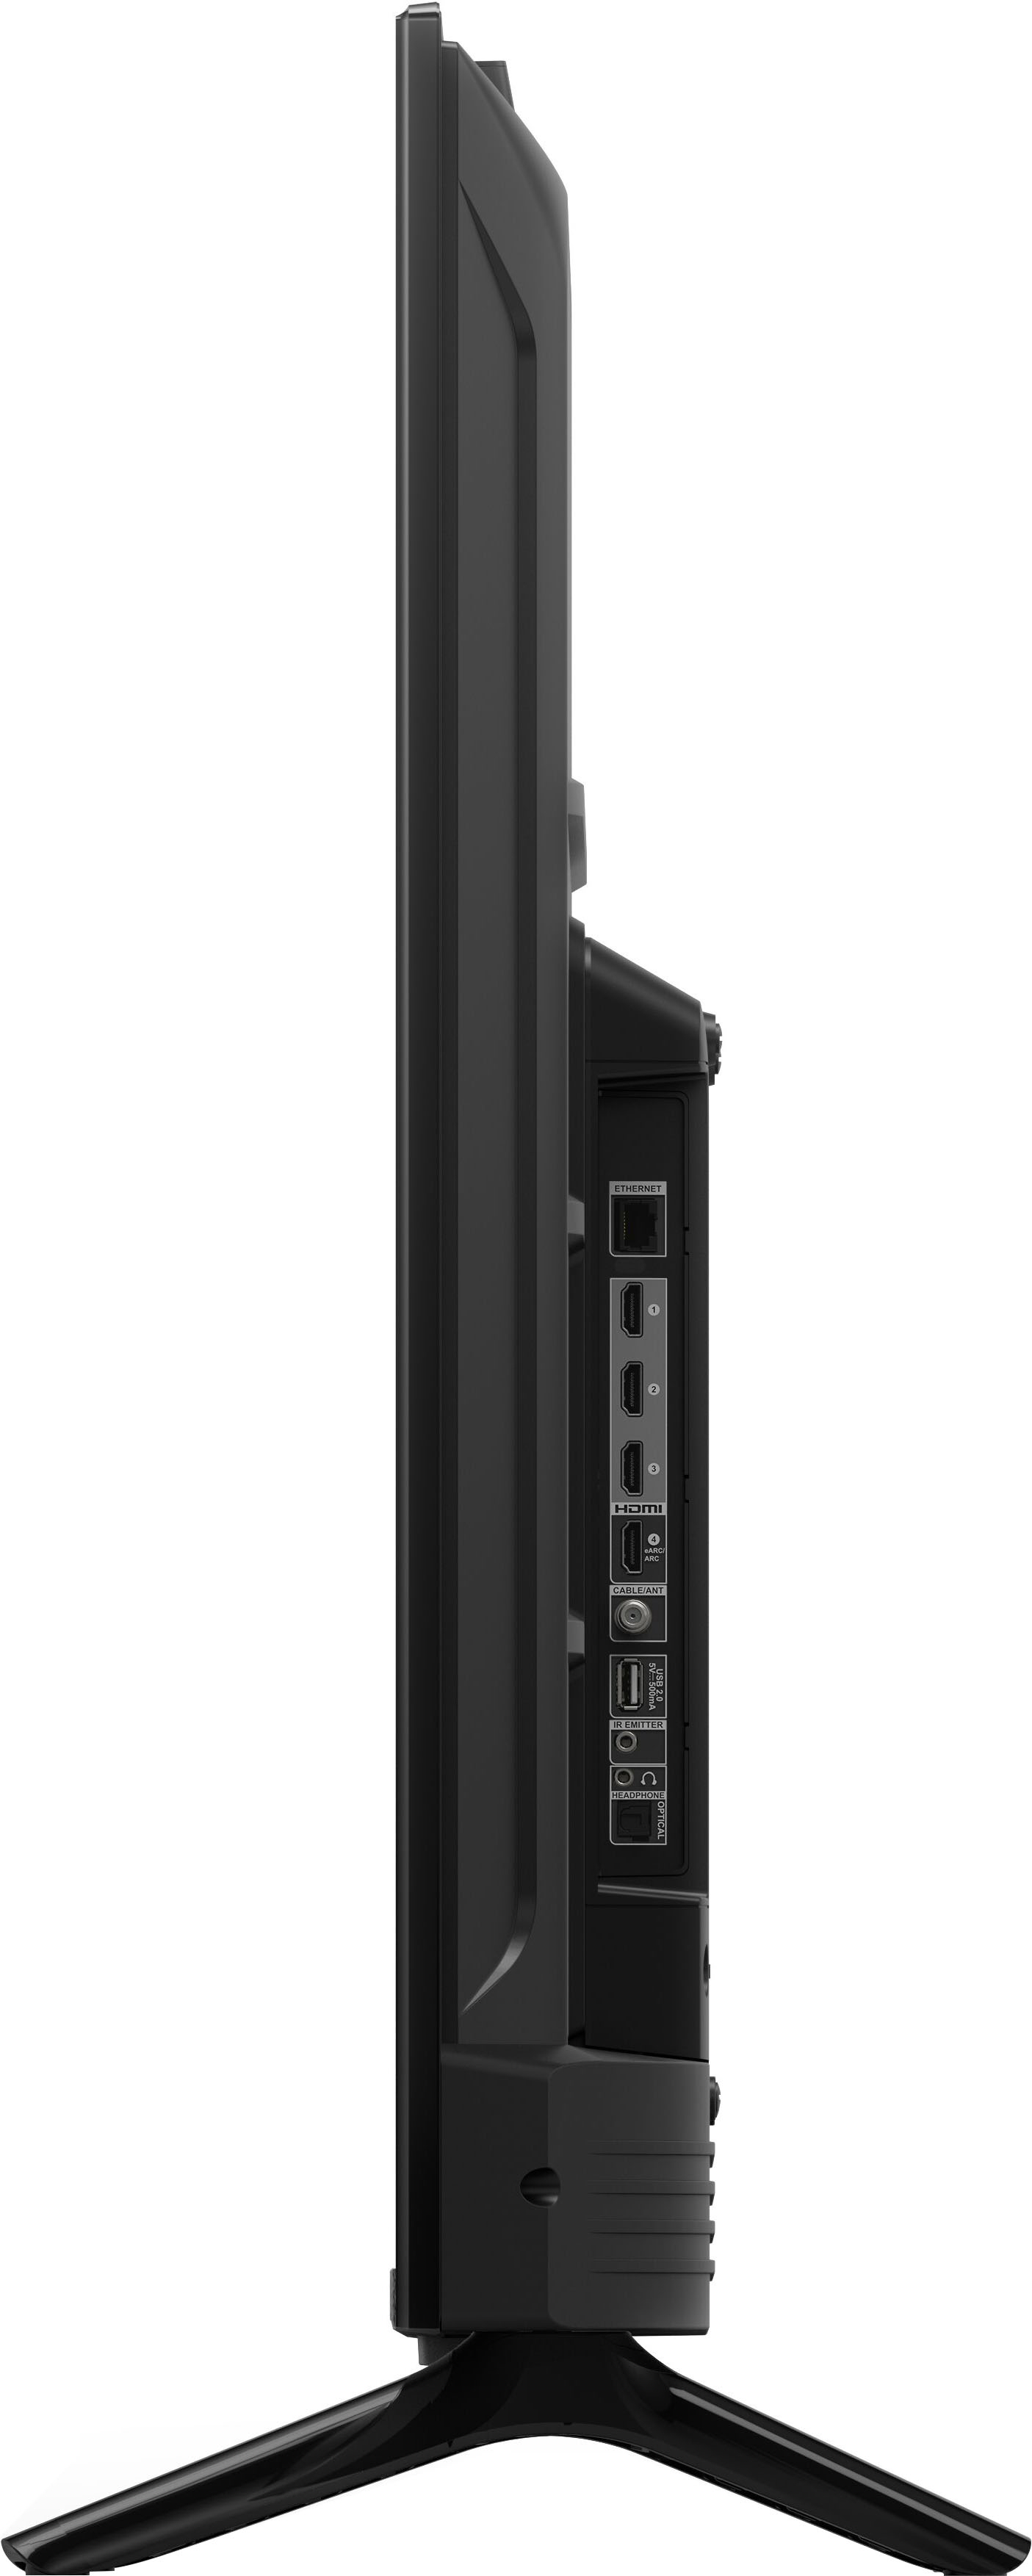 Left View: Amazon - 43" Class Omni Series 4K UHD Smart Fire TV hands-free with Alexa